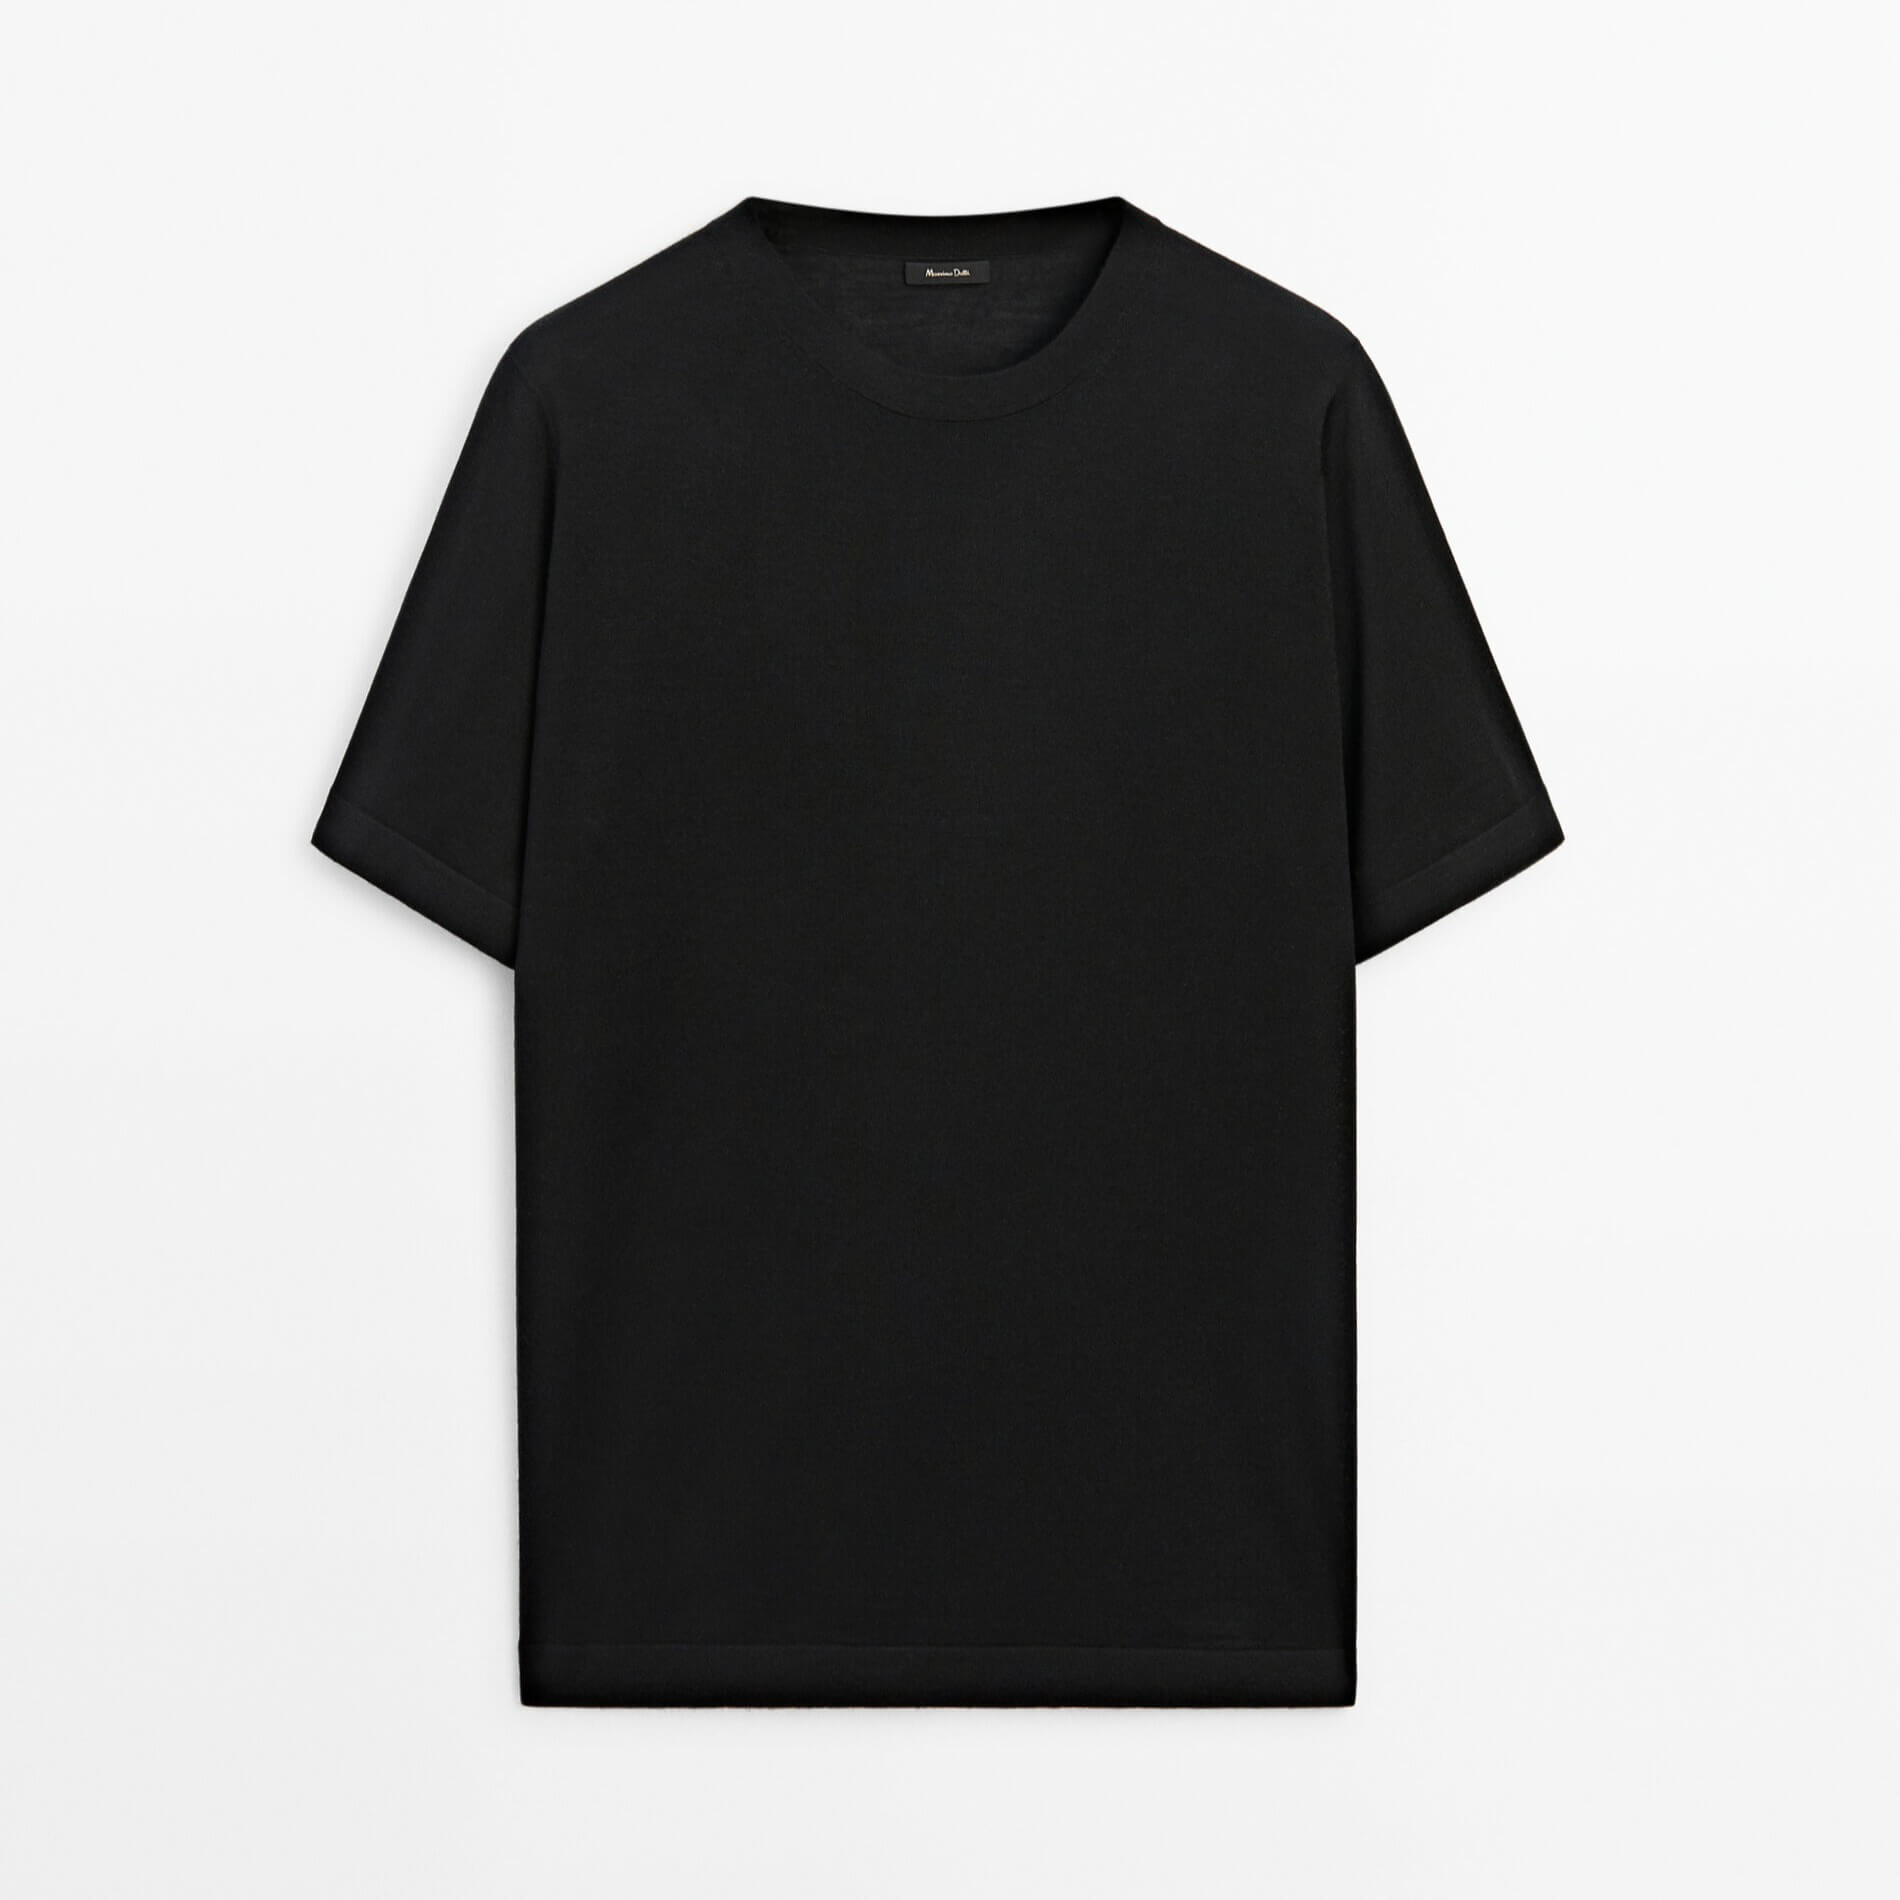 Футболка Massimo Dutti Short Sleeve Wool Blend, черный кофта вязаная с коротким рукавом 42 44 размер